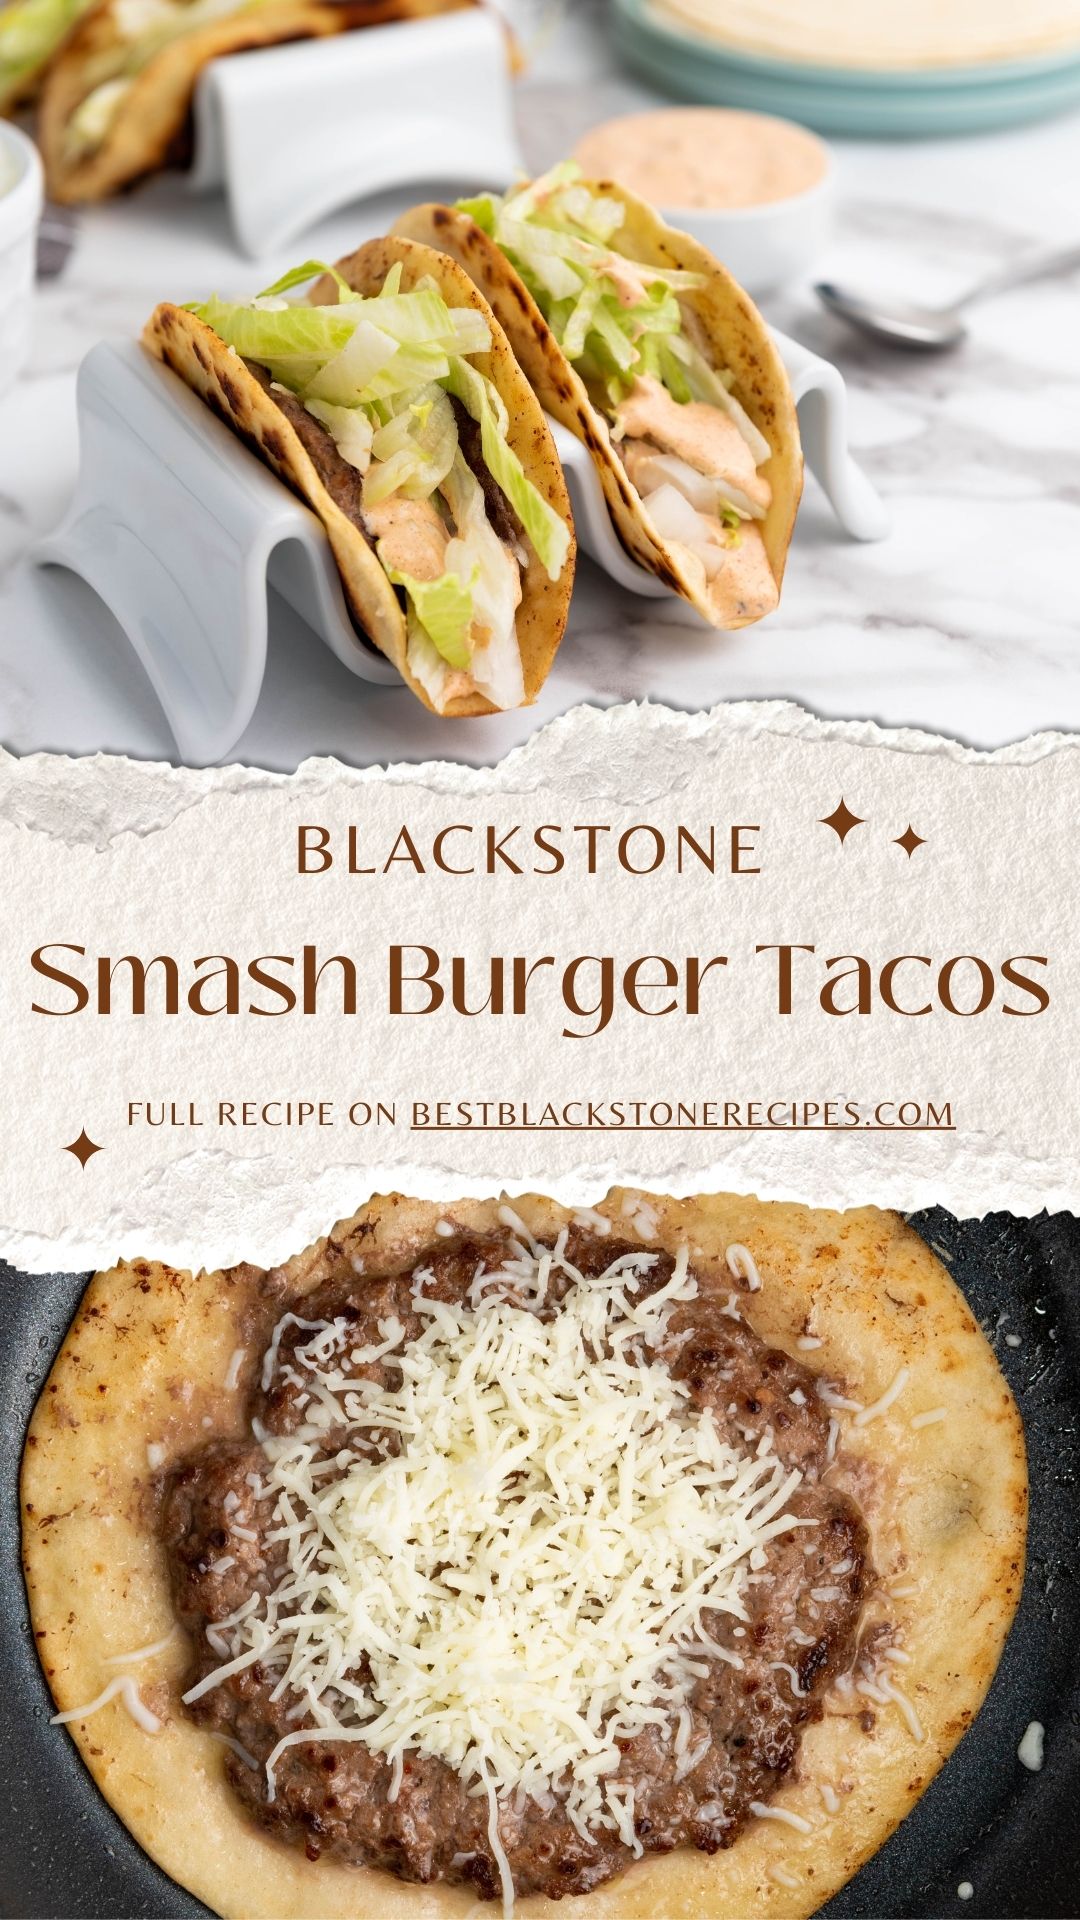 Blackstone smash burger tacos.